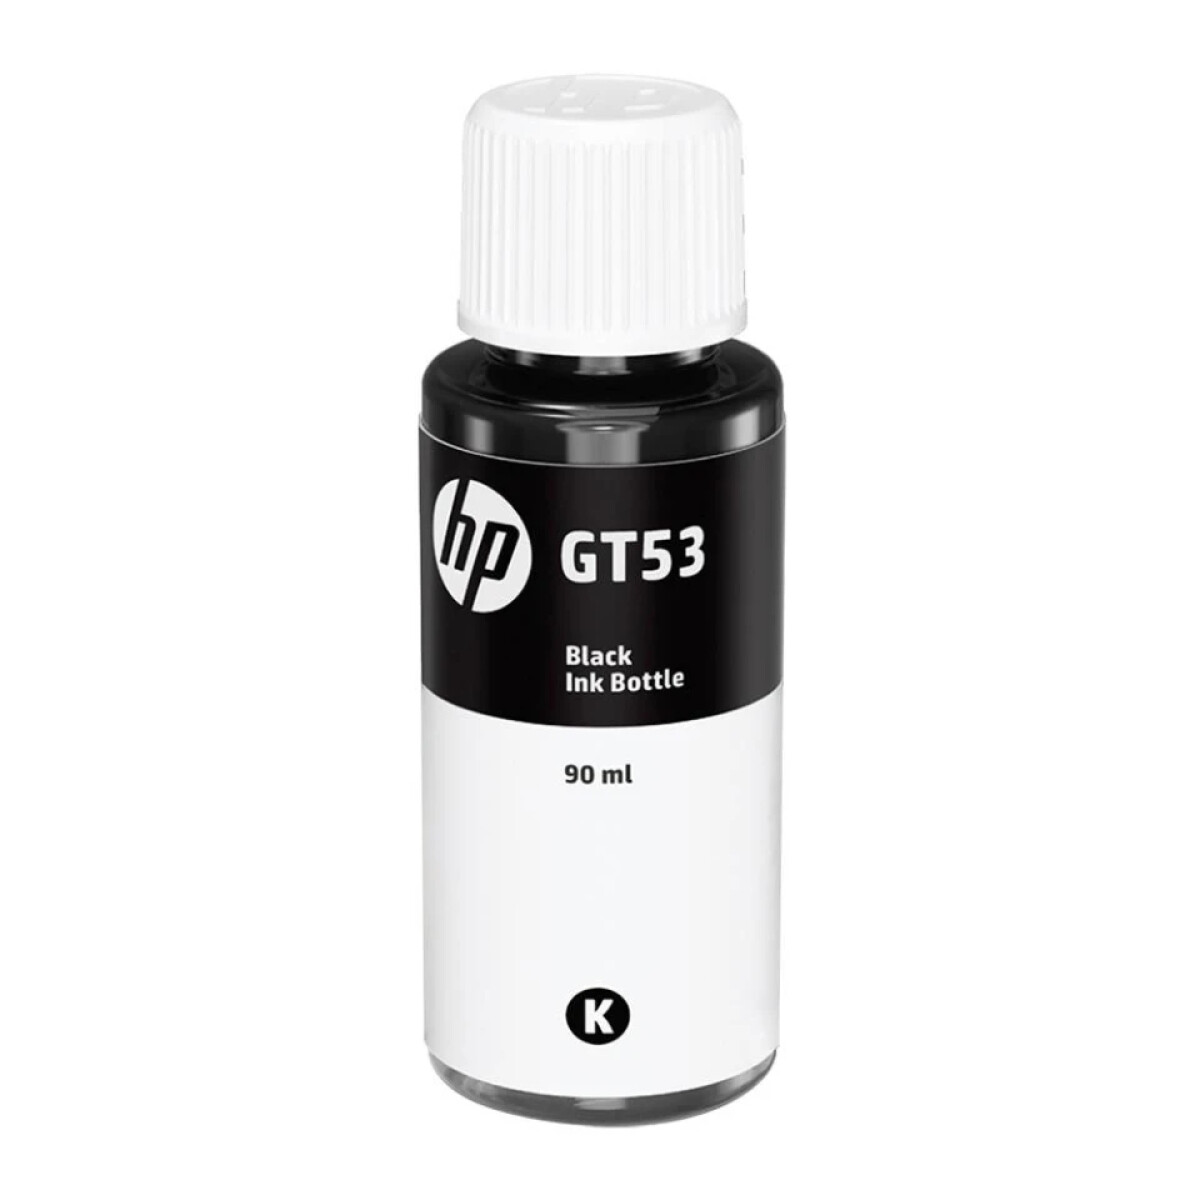 Recarga de Tinta para Impresora HP GT53 NEGRO Original - Recarga De Tinta Para Impresora Hp Gt53 Negro Original 